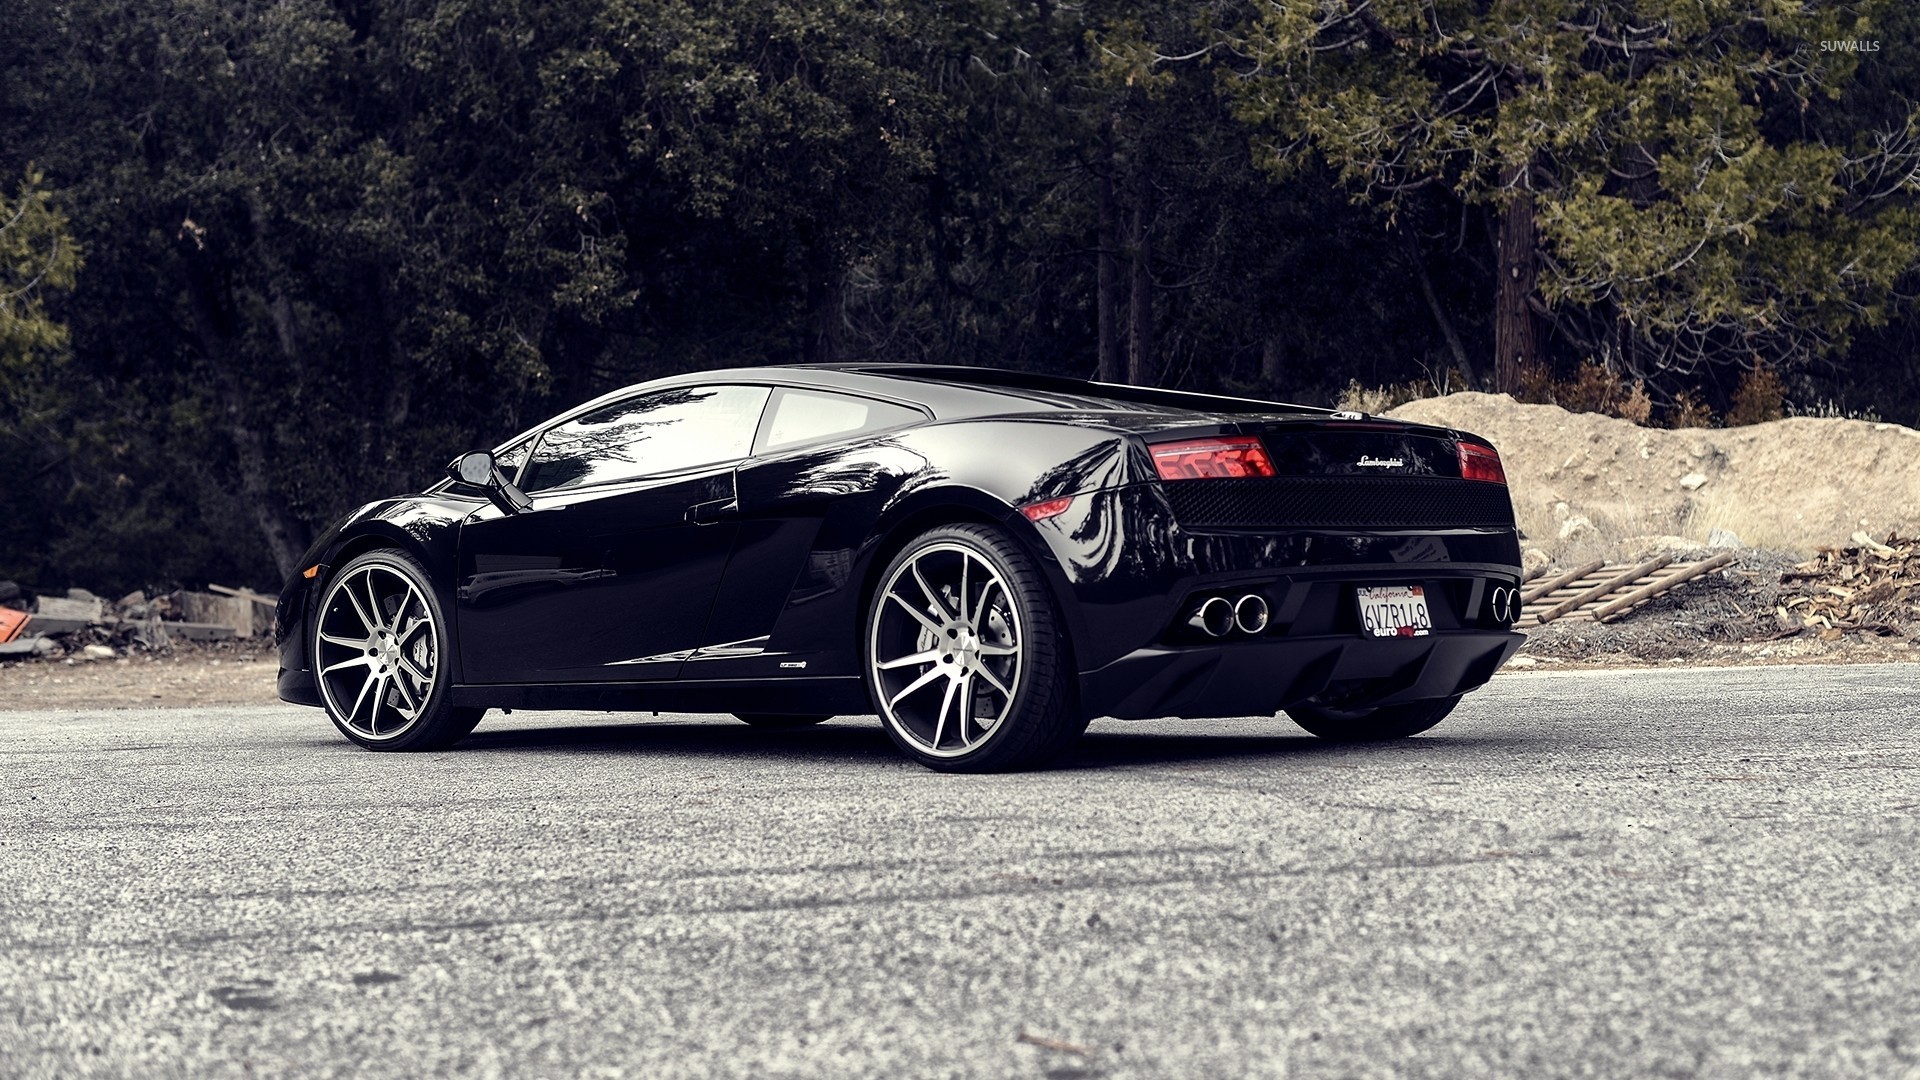 Back Side Of A Black Lamborghini Gallardo Wallpaper Car